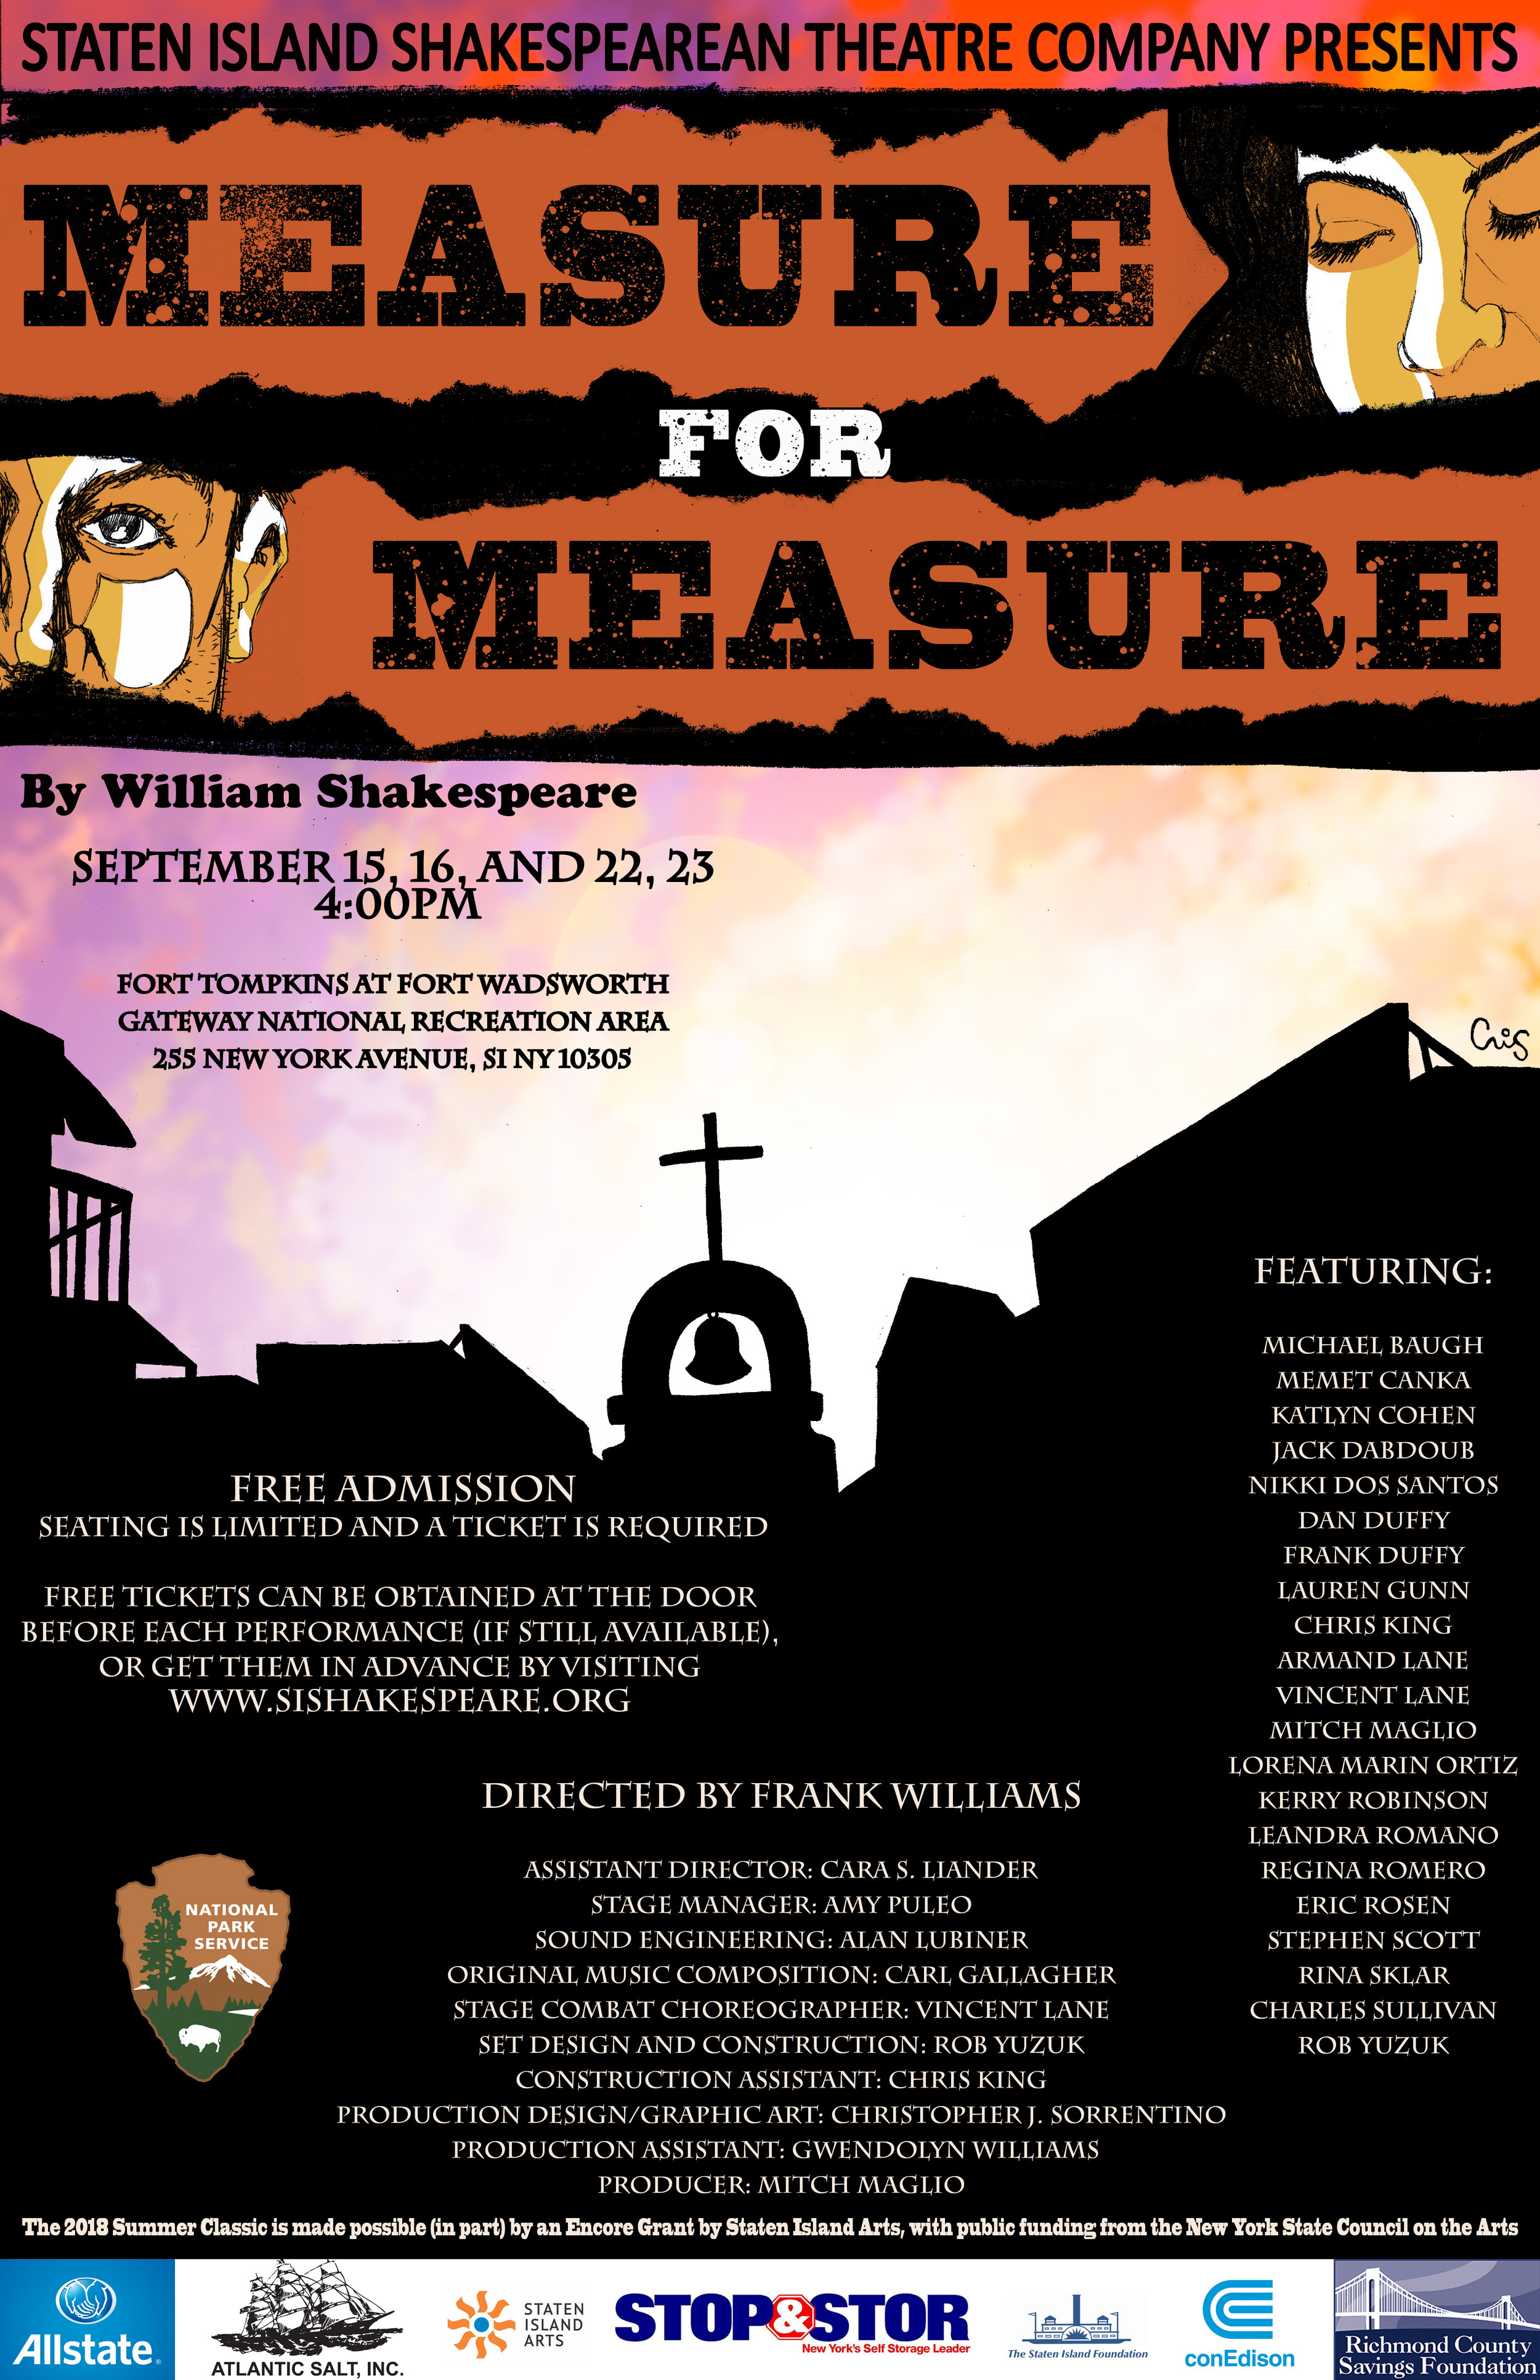 William Shakespeare's MEASURE FOR MEASURE